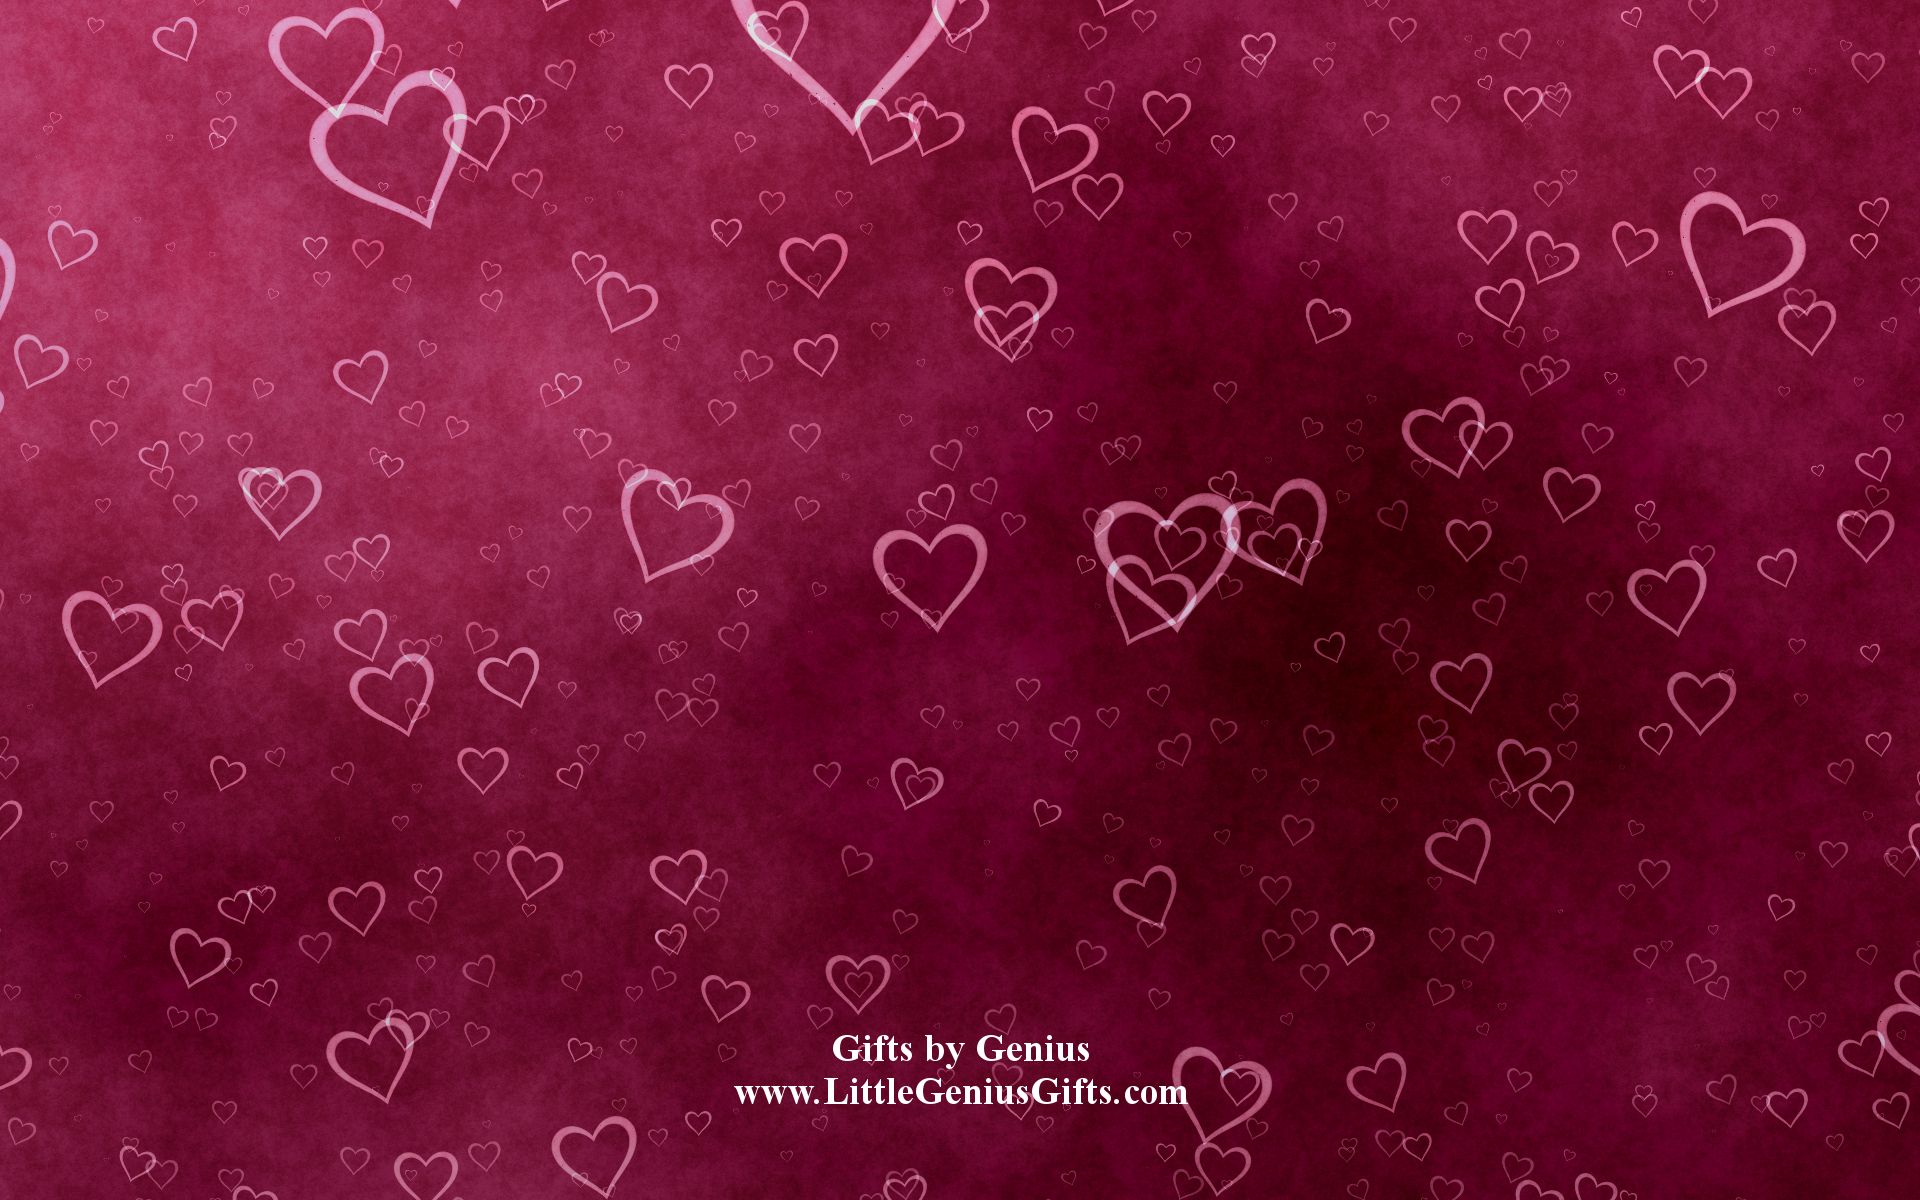 Free Valentine's Day Desktop Wallpaper. Valentines wallpaper, Free valentine wallpaper, Free valentine